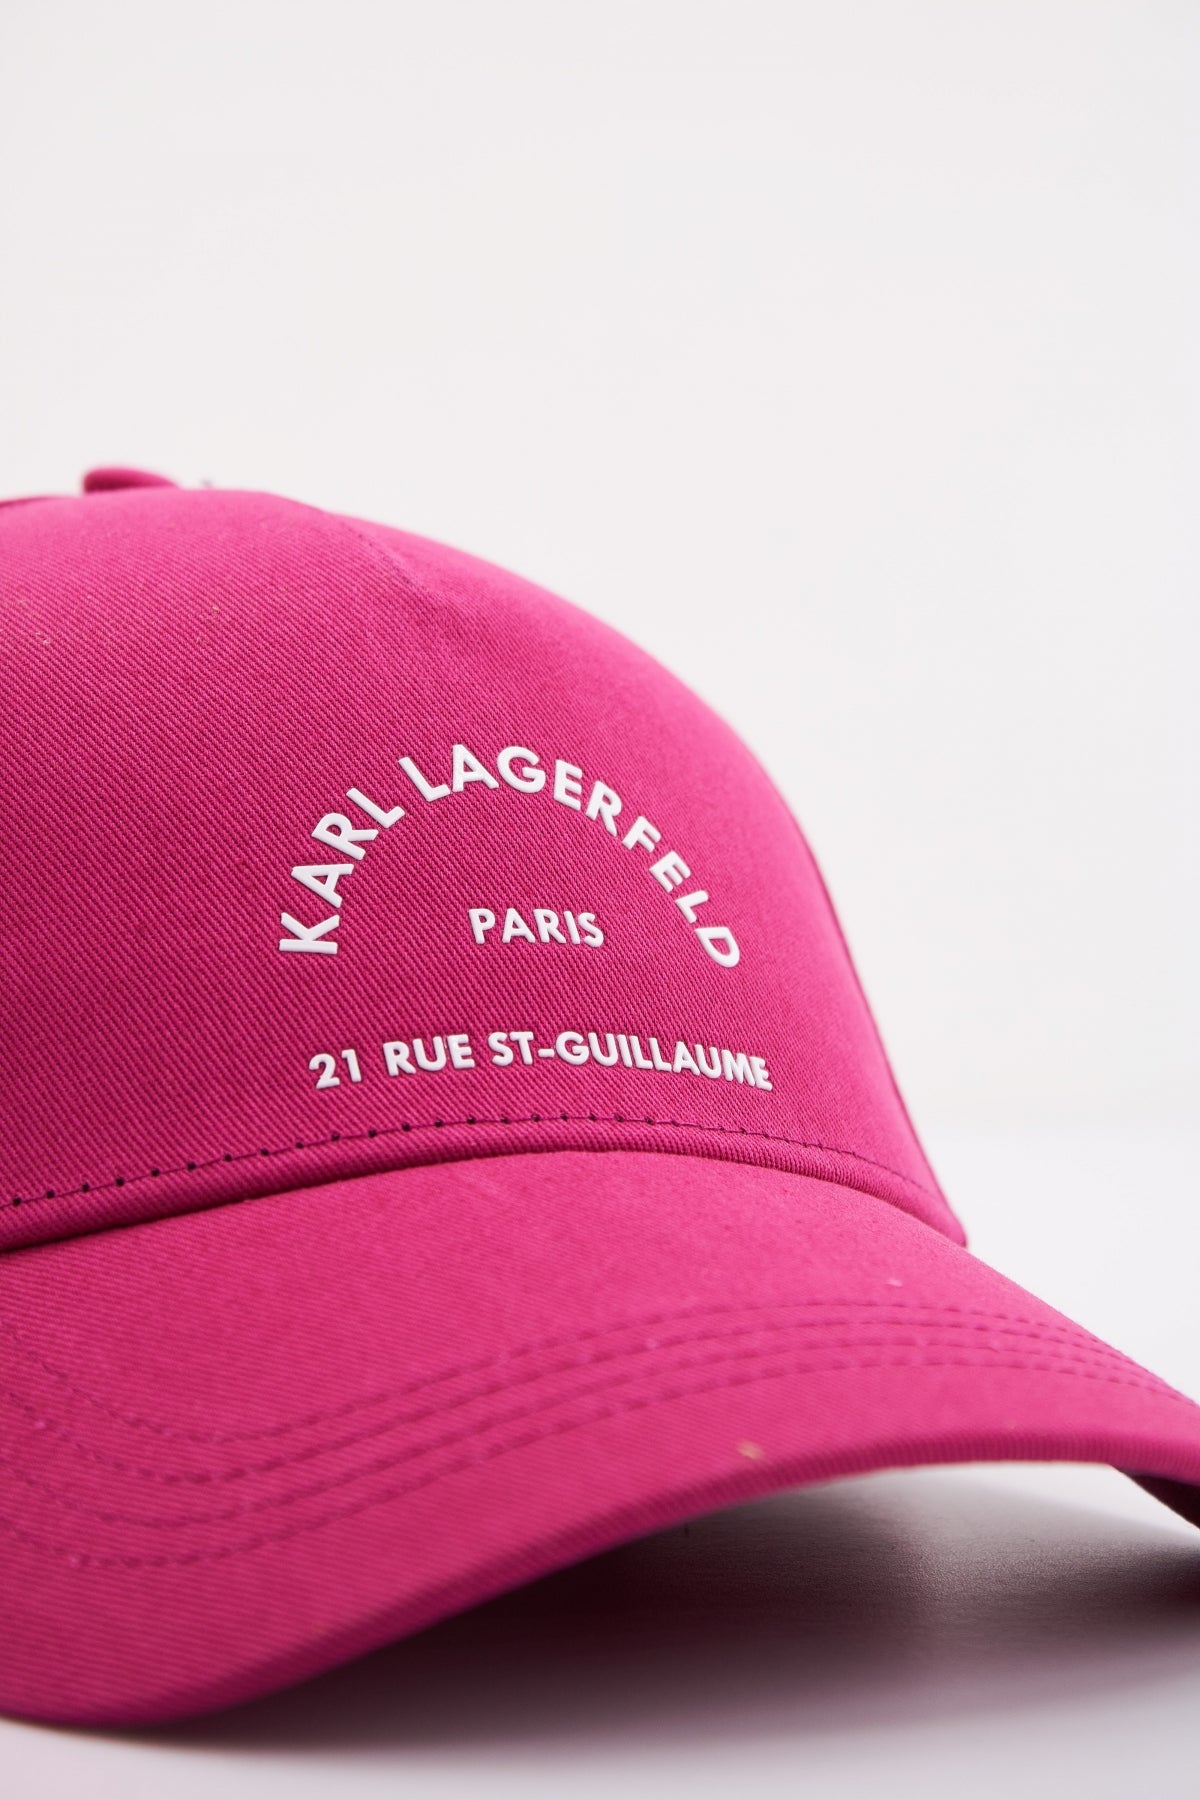 KARL LAGERFELD RSG CAP en color ROSA  (4)